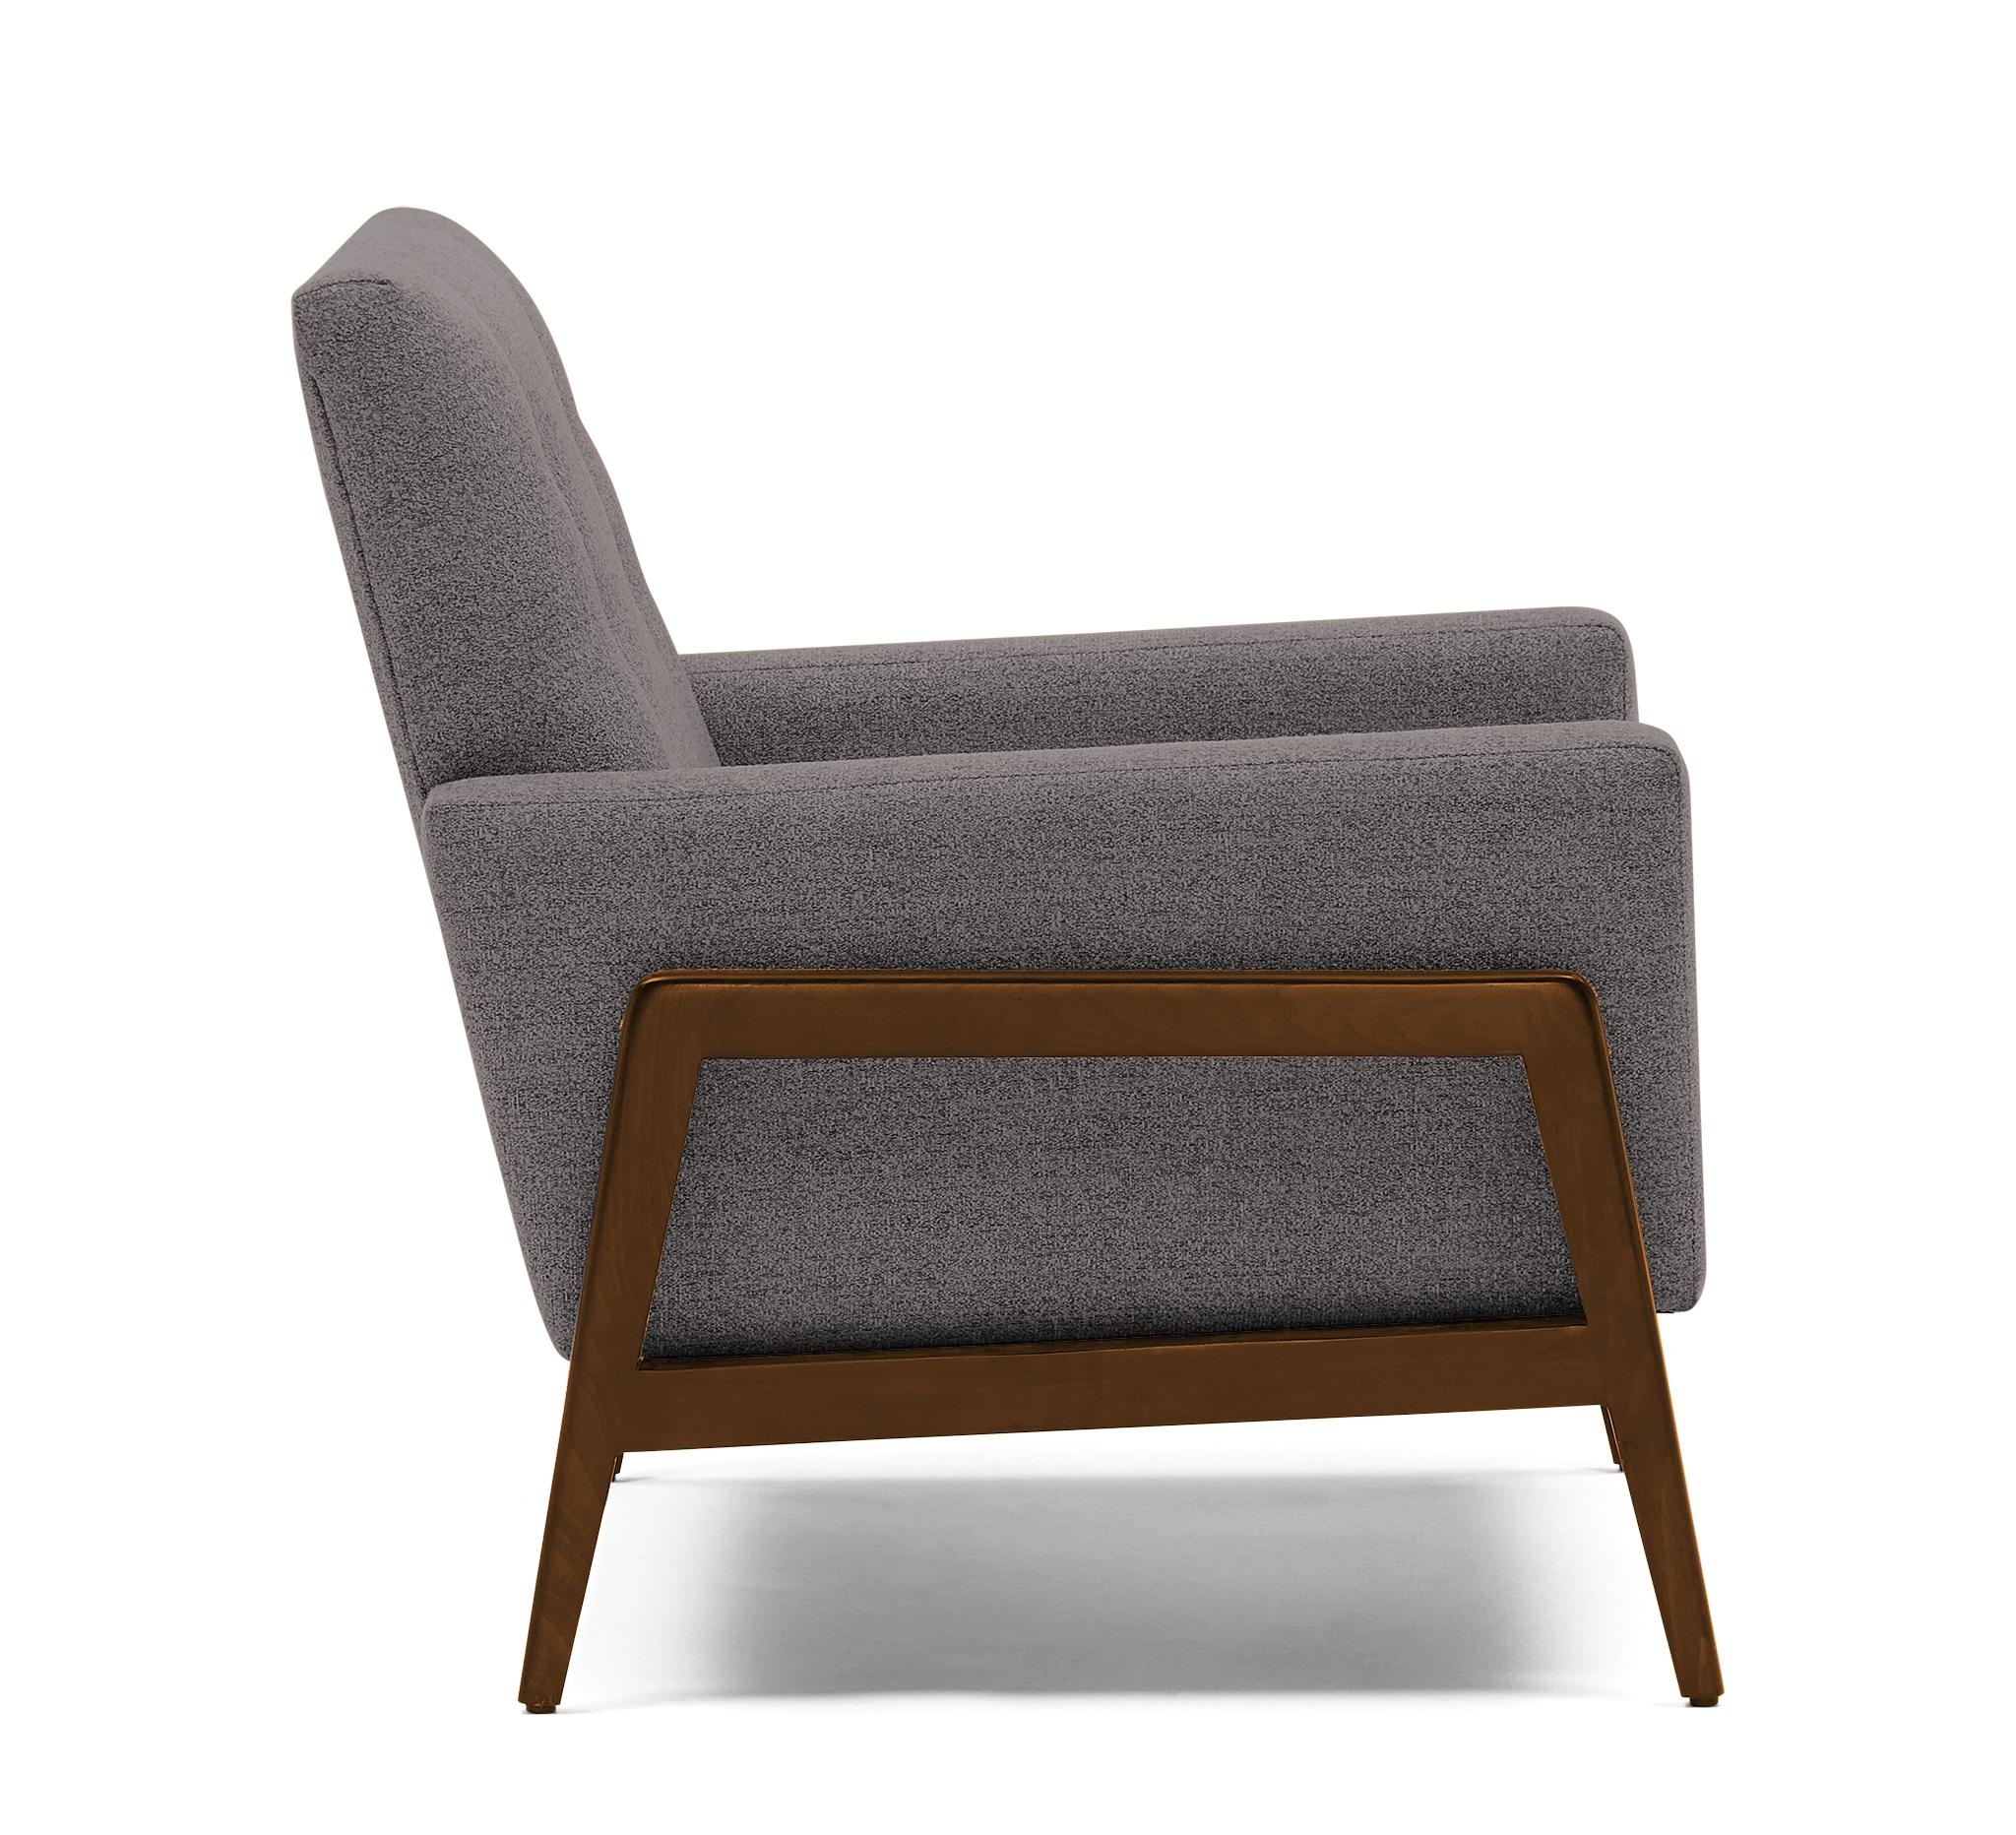 Gray Clyde Mid Century Modern Chair - Taylor Felt Grey - Mocha - Image 2